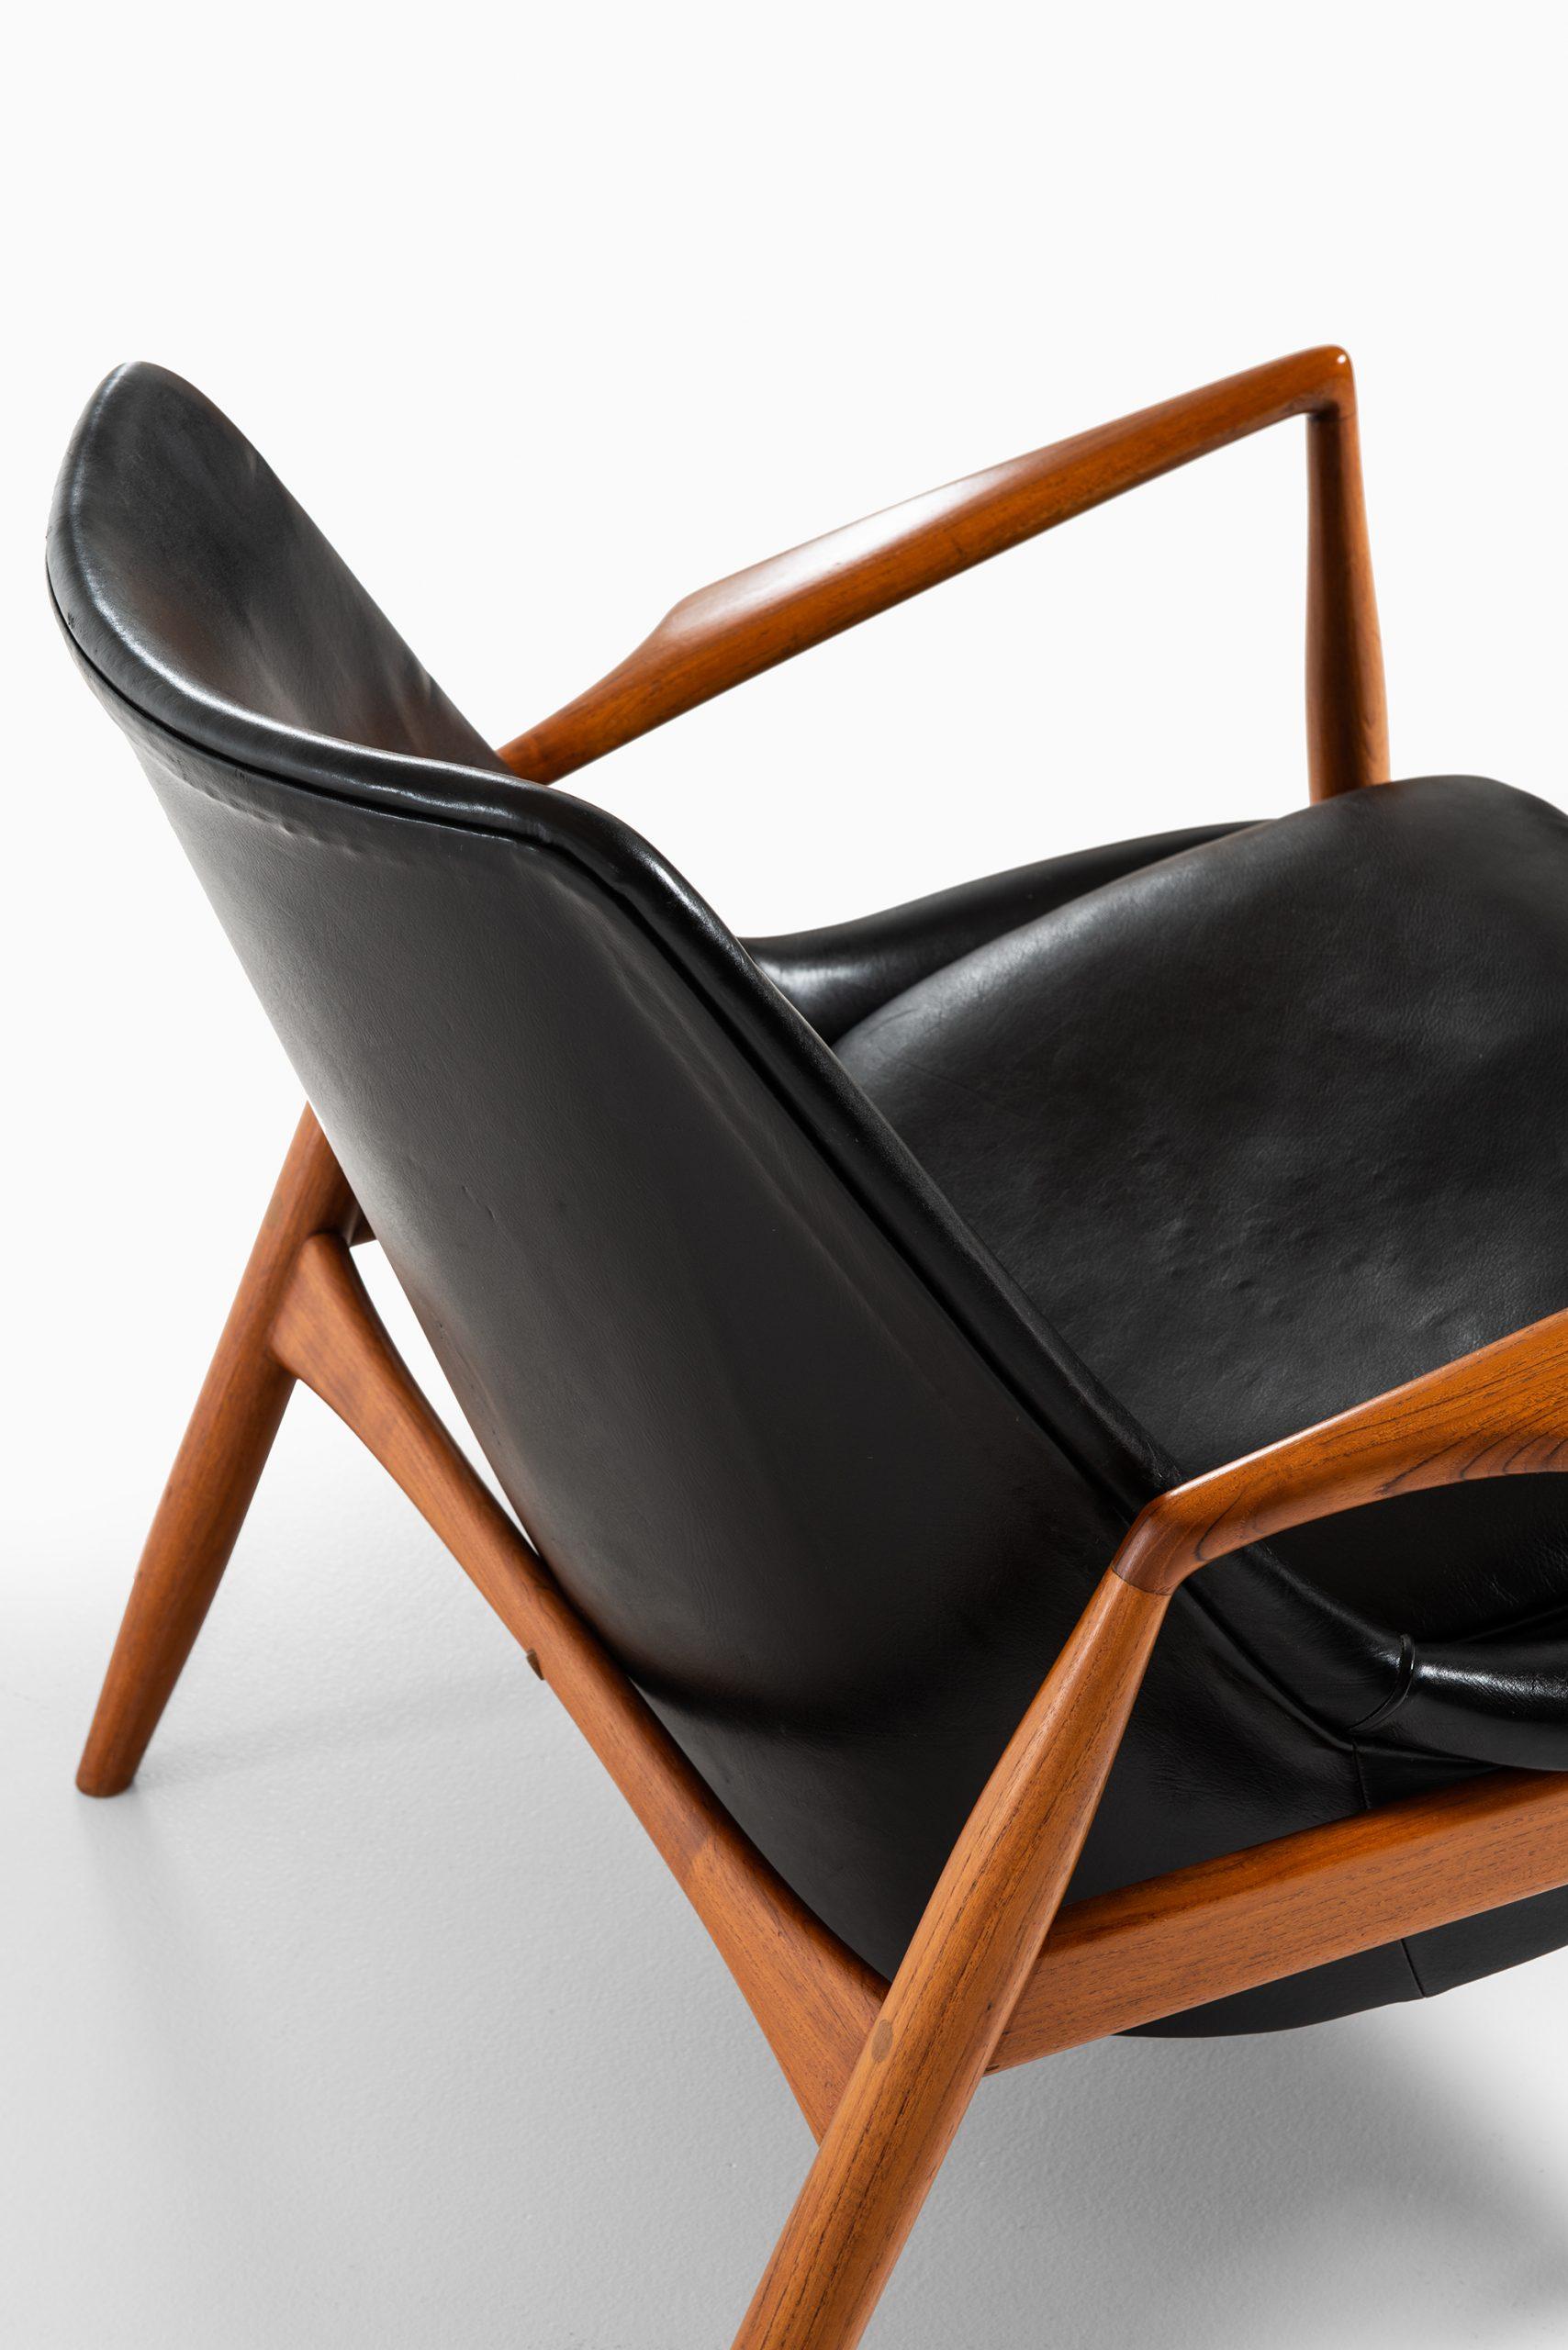 Scandinavian Modern Ib Kofod-Larsen Easy Chair Model Sälen / Seal Produced by OPE in Sweden For Sale